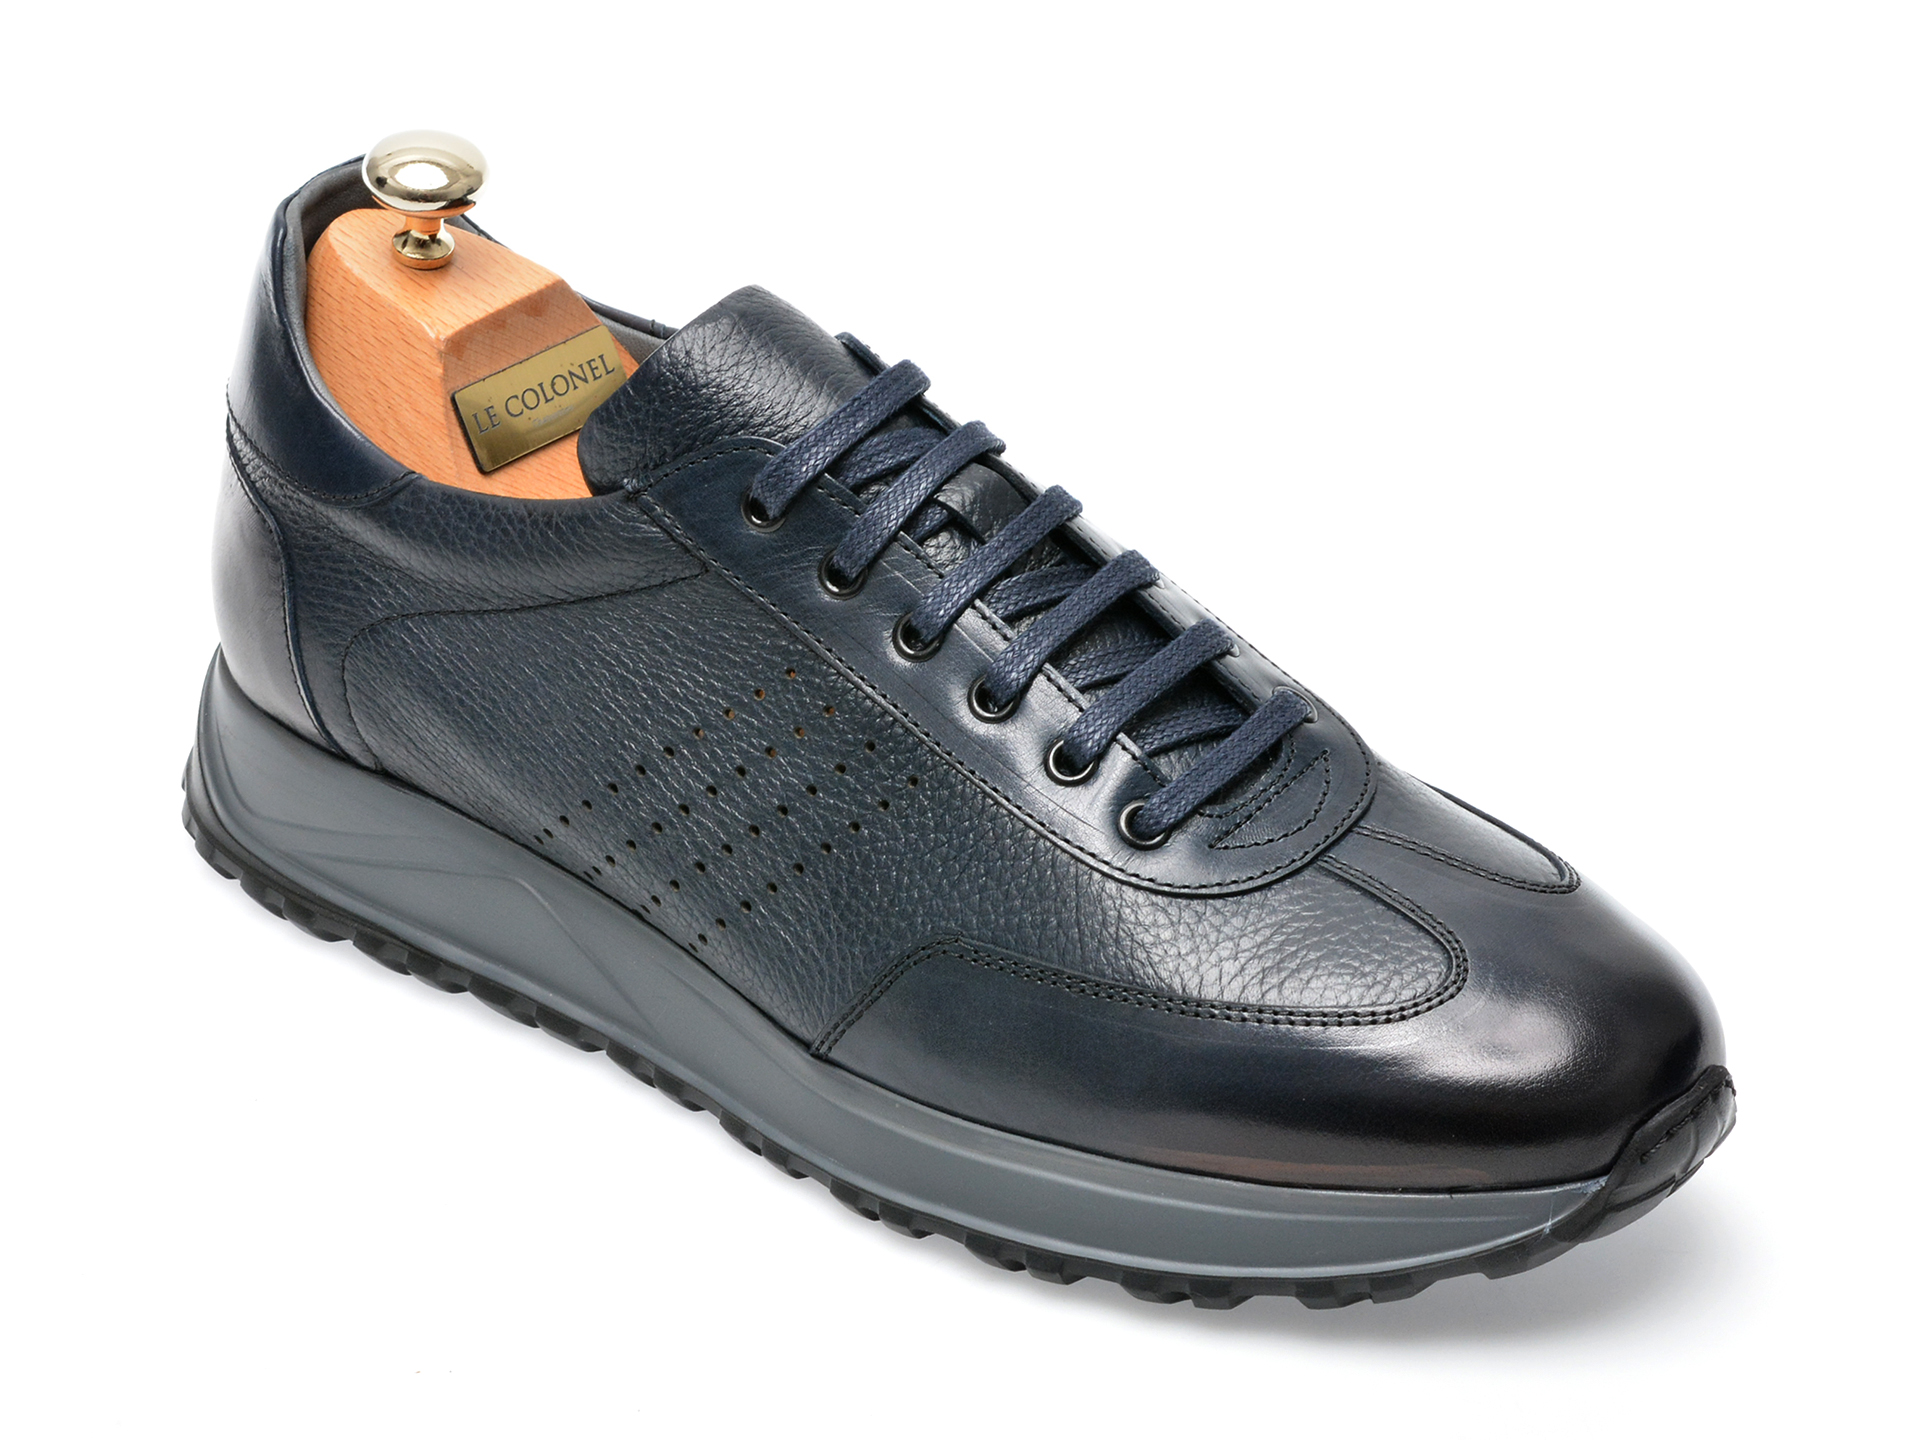 Pantofi LE COLONEL bleumarin, 62818, din piele naturala /barbati/pantofi